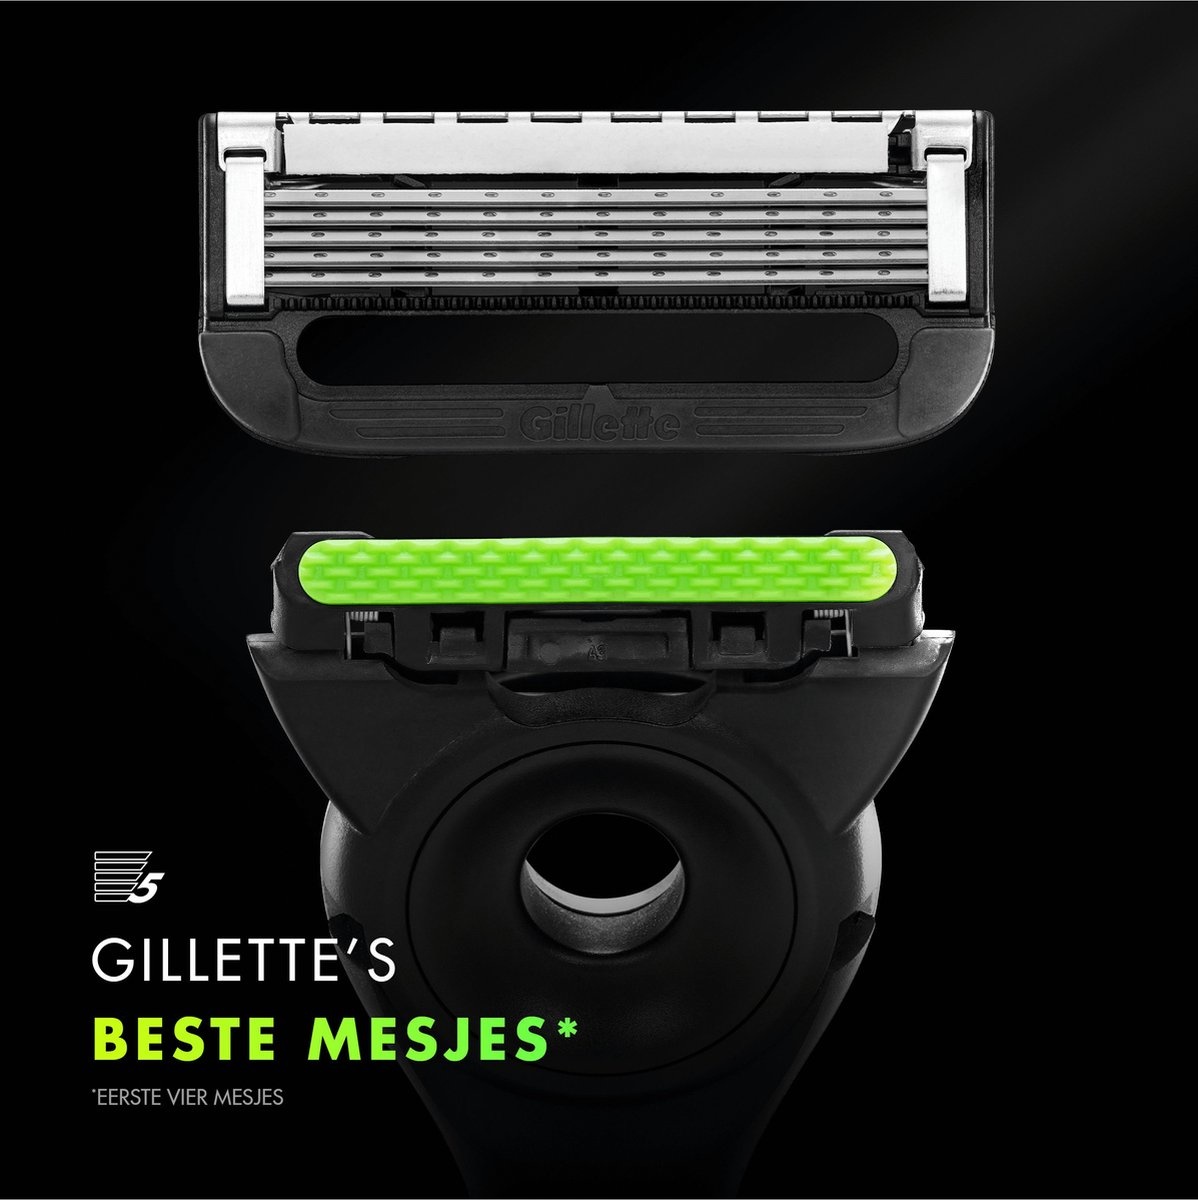 GilletteLabs With Exfoliating Bar From Gillette - 1 Handle - 5 Razor Blades - Magnetic Holder - Travel Case - Packaging damaged